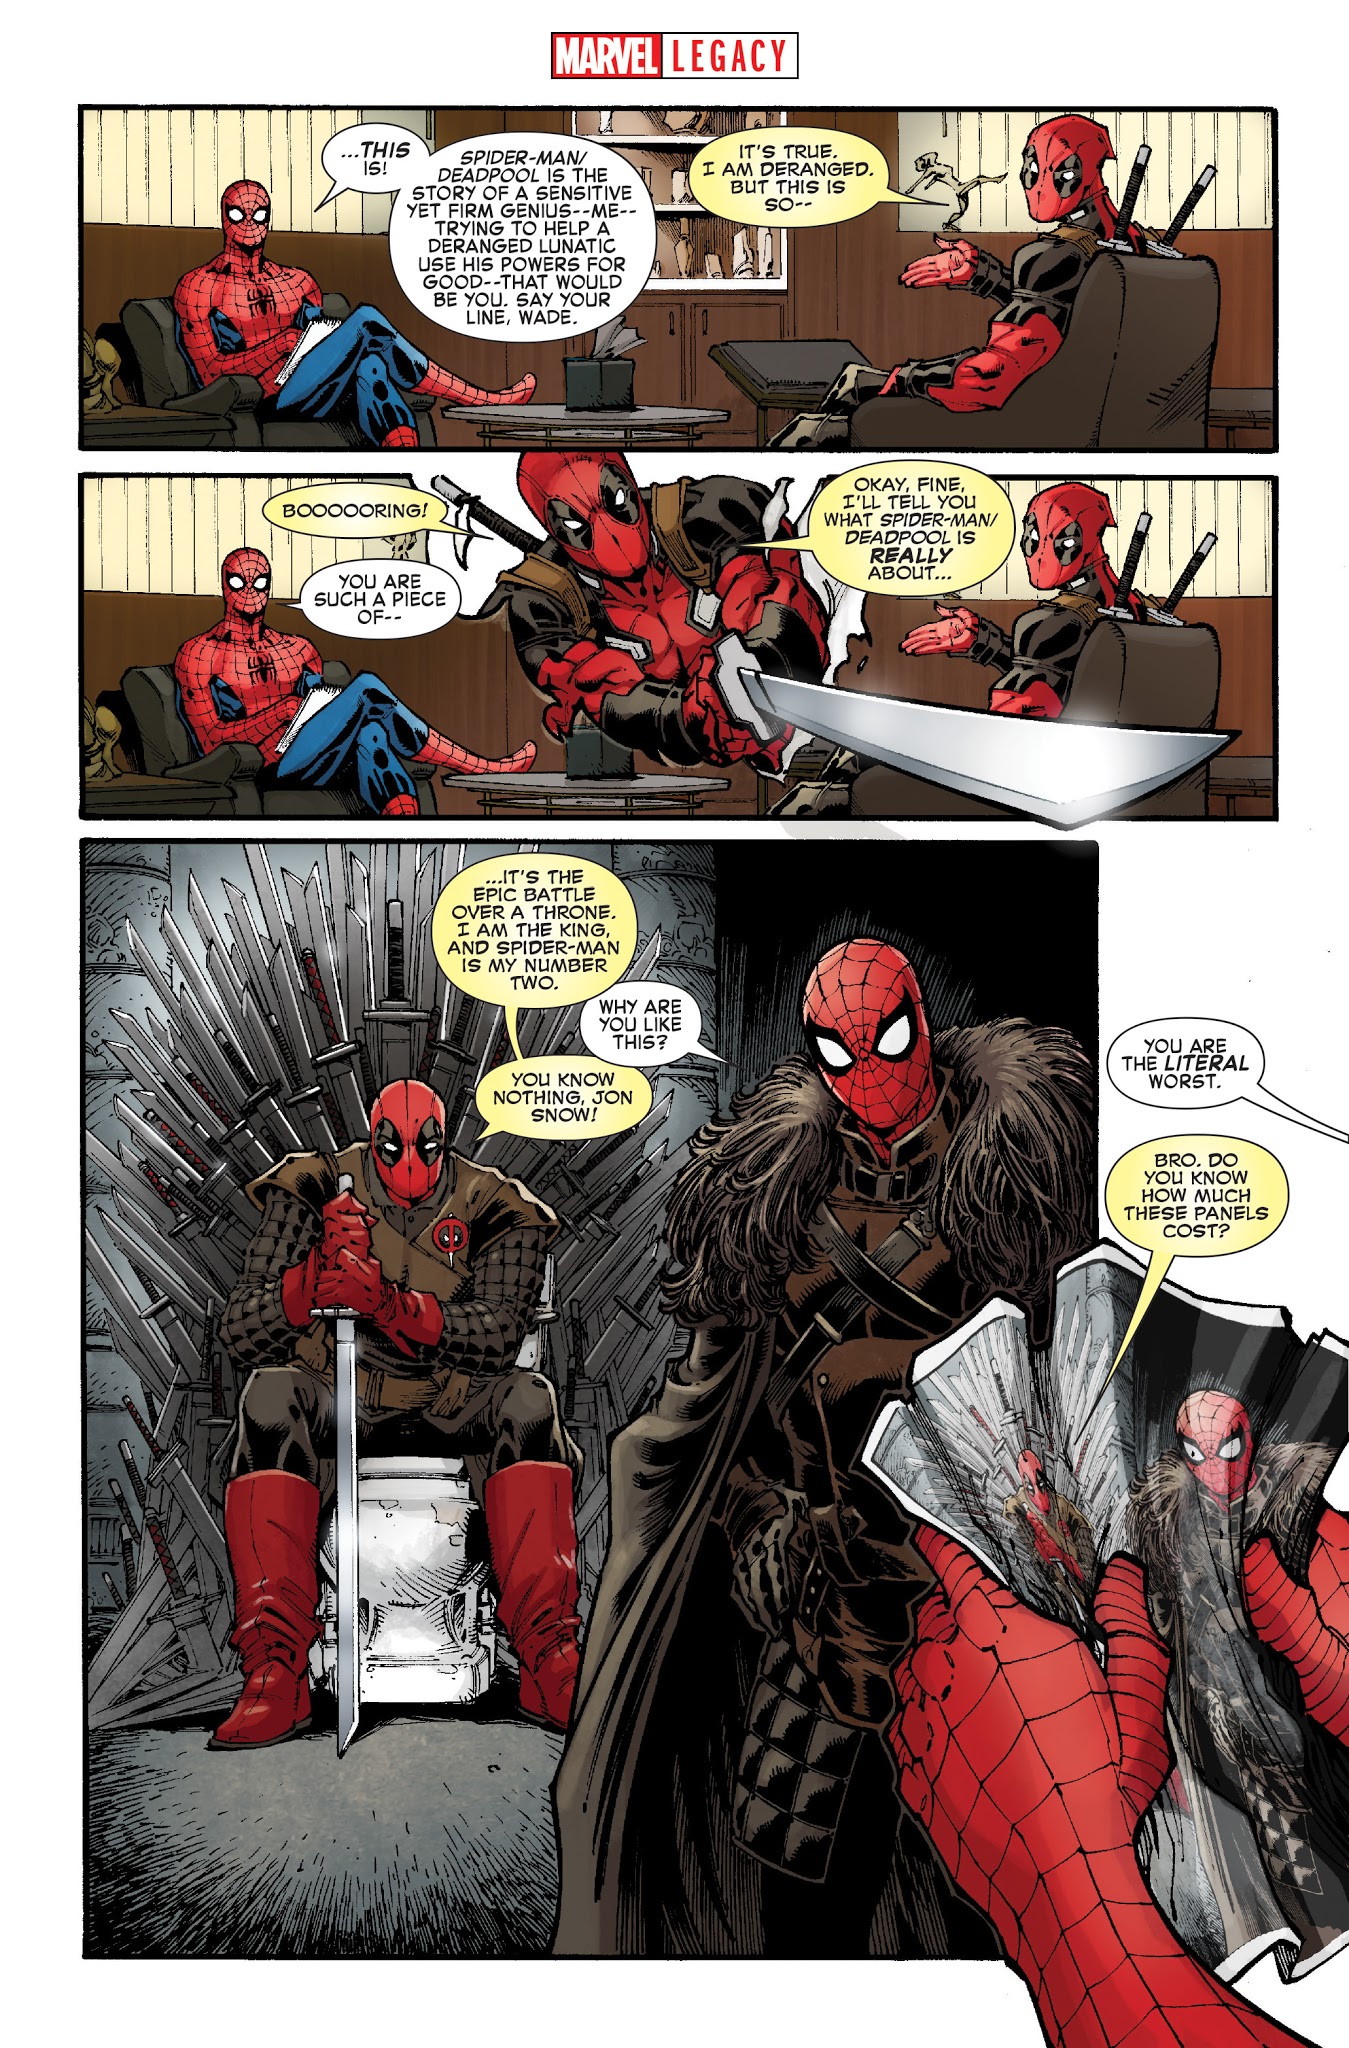 Read online Spider-Man/Deadpool comic -  Issue # Issue Spider-Man - Deadpool - Marvel Legacy Primer Pages - 3